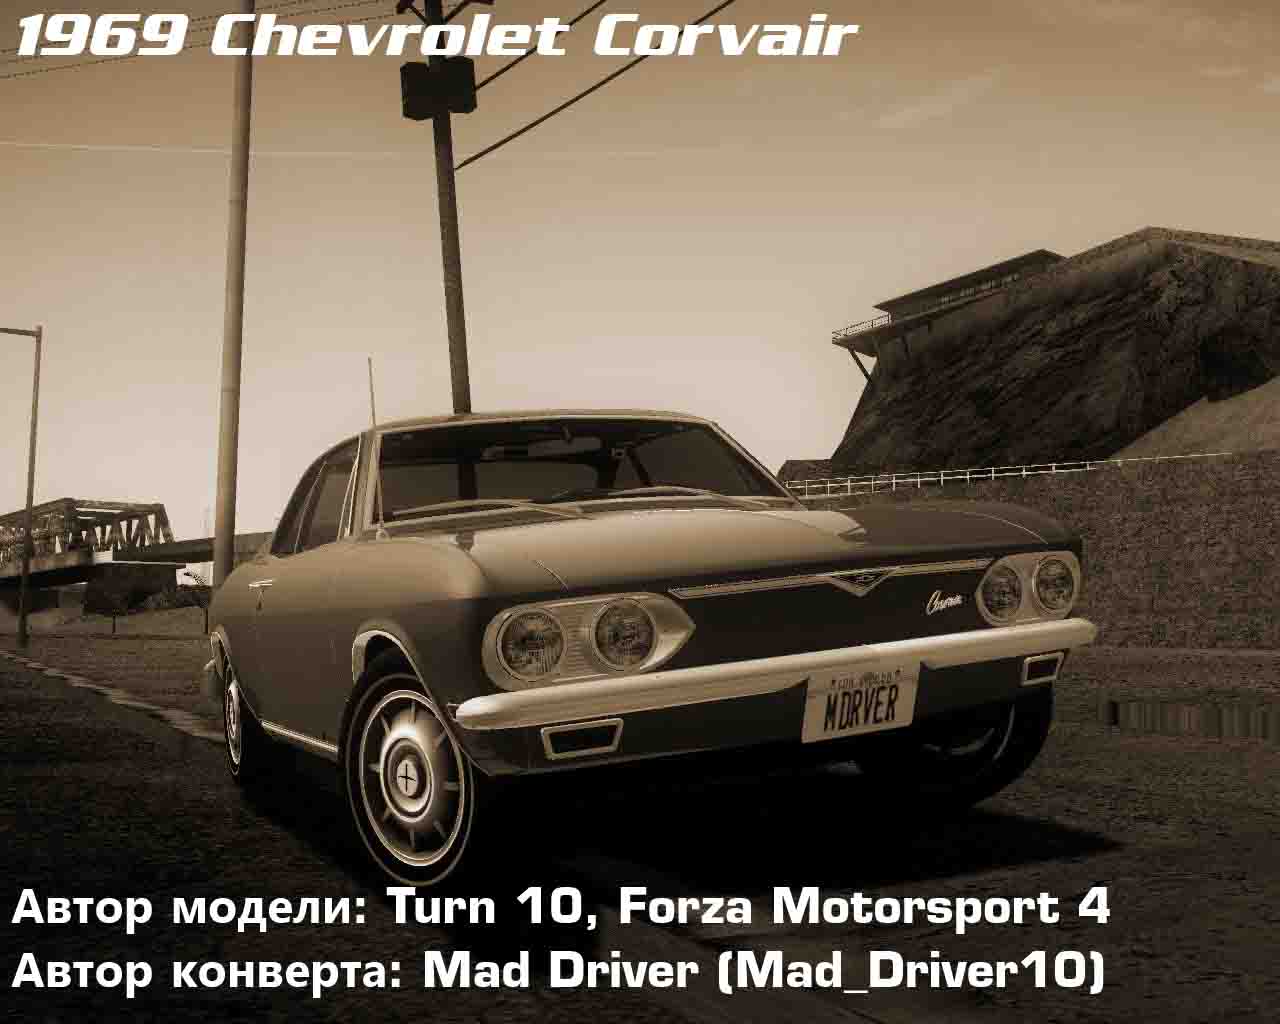 Chevrolet Corvair Monza 1969